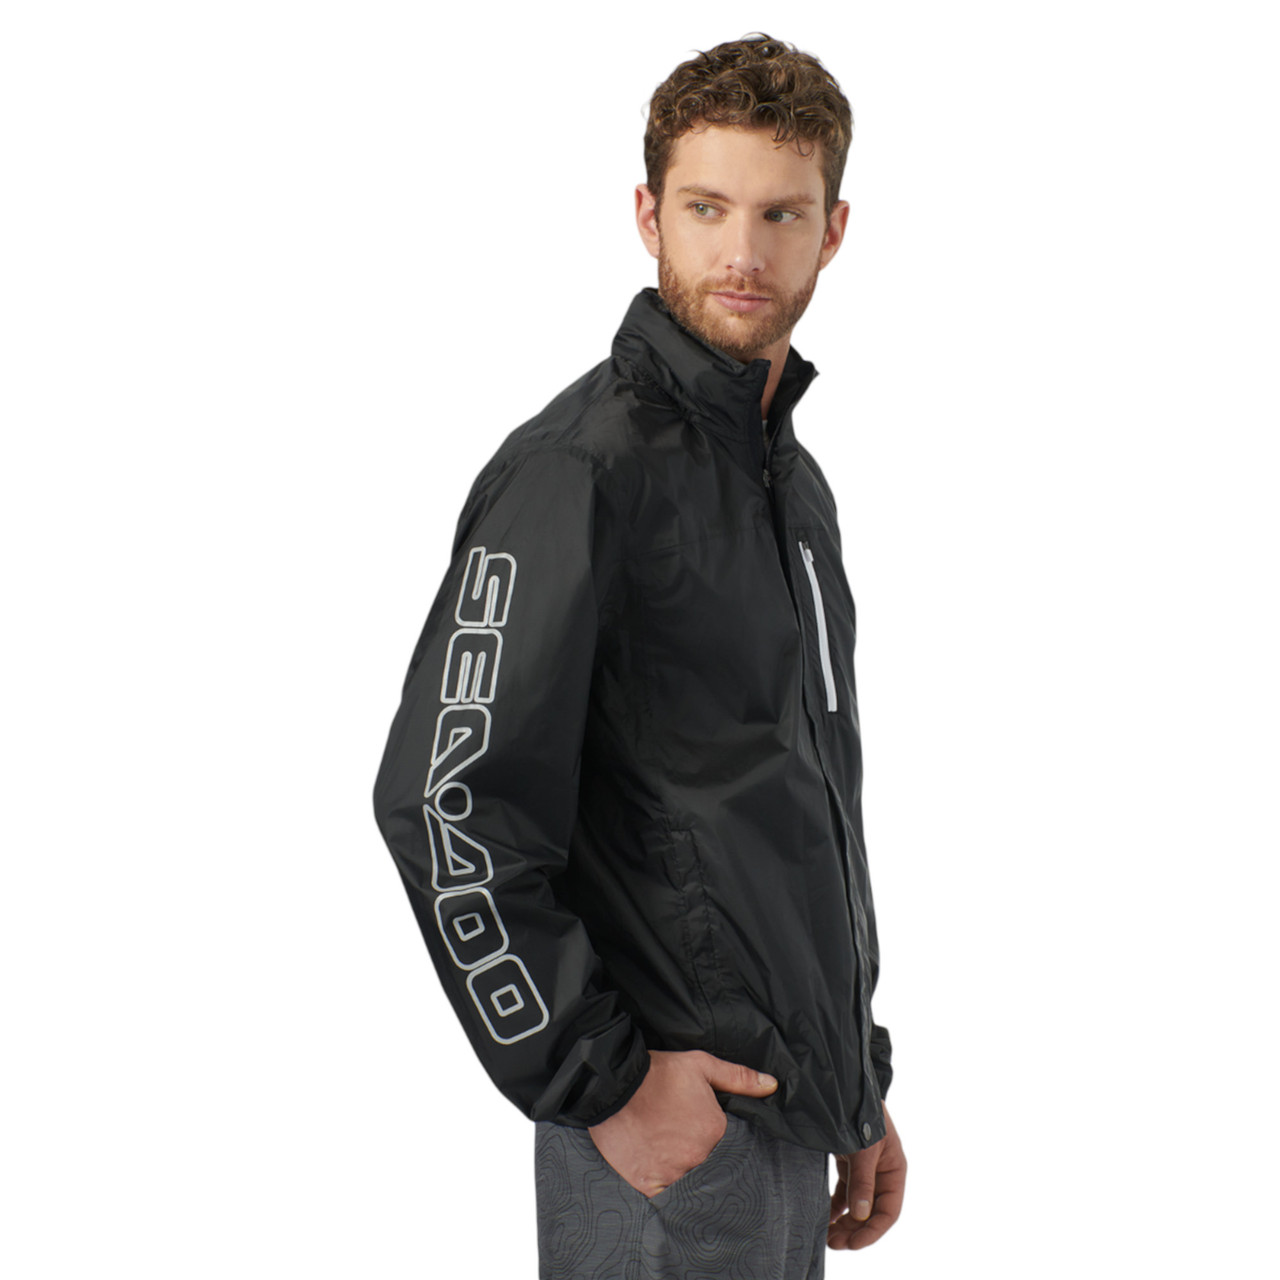 Sea-Doo New OEM, Men's Large Water-Resistant Windproof Jacket, 4547000990